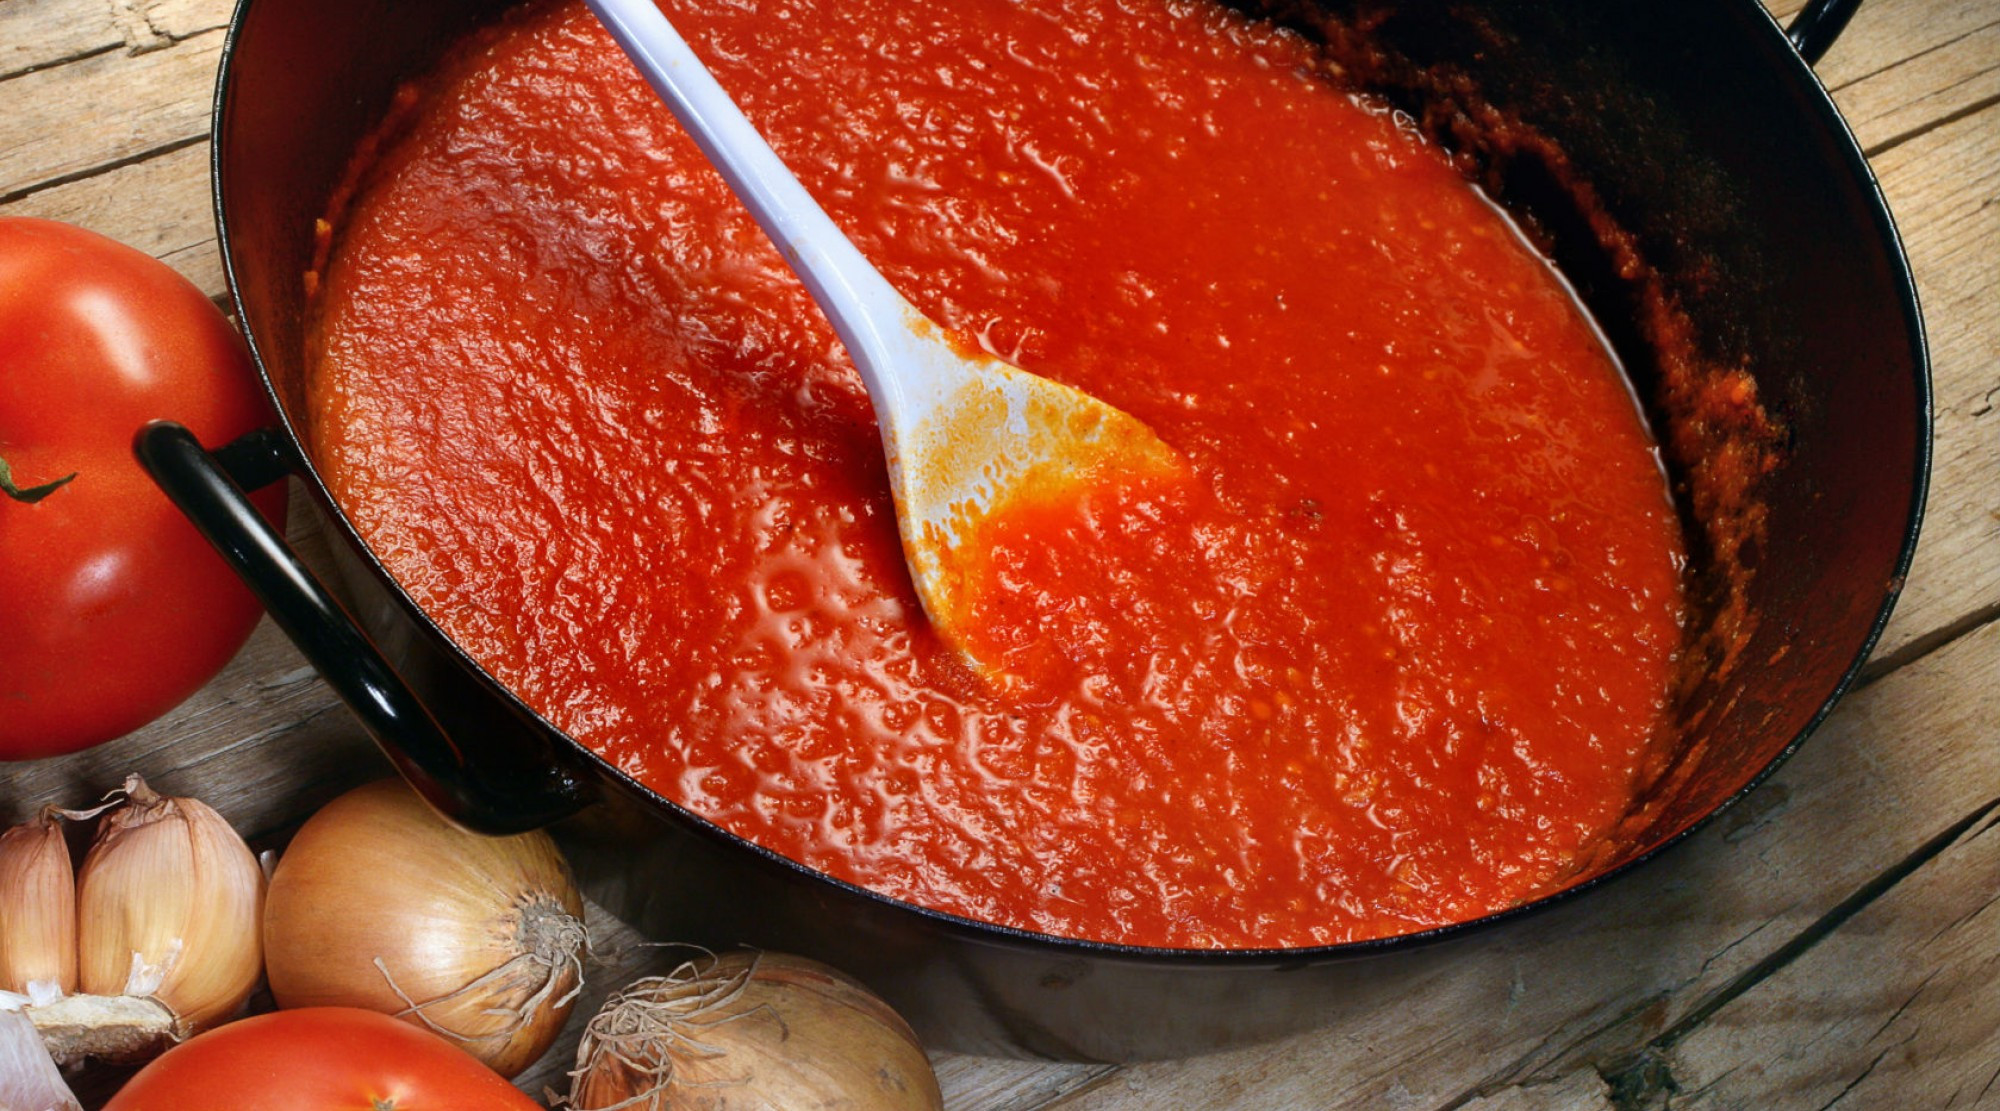 Simple Tomato Sauce Recipe
 Simple Tomato Sauce